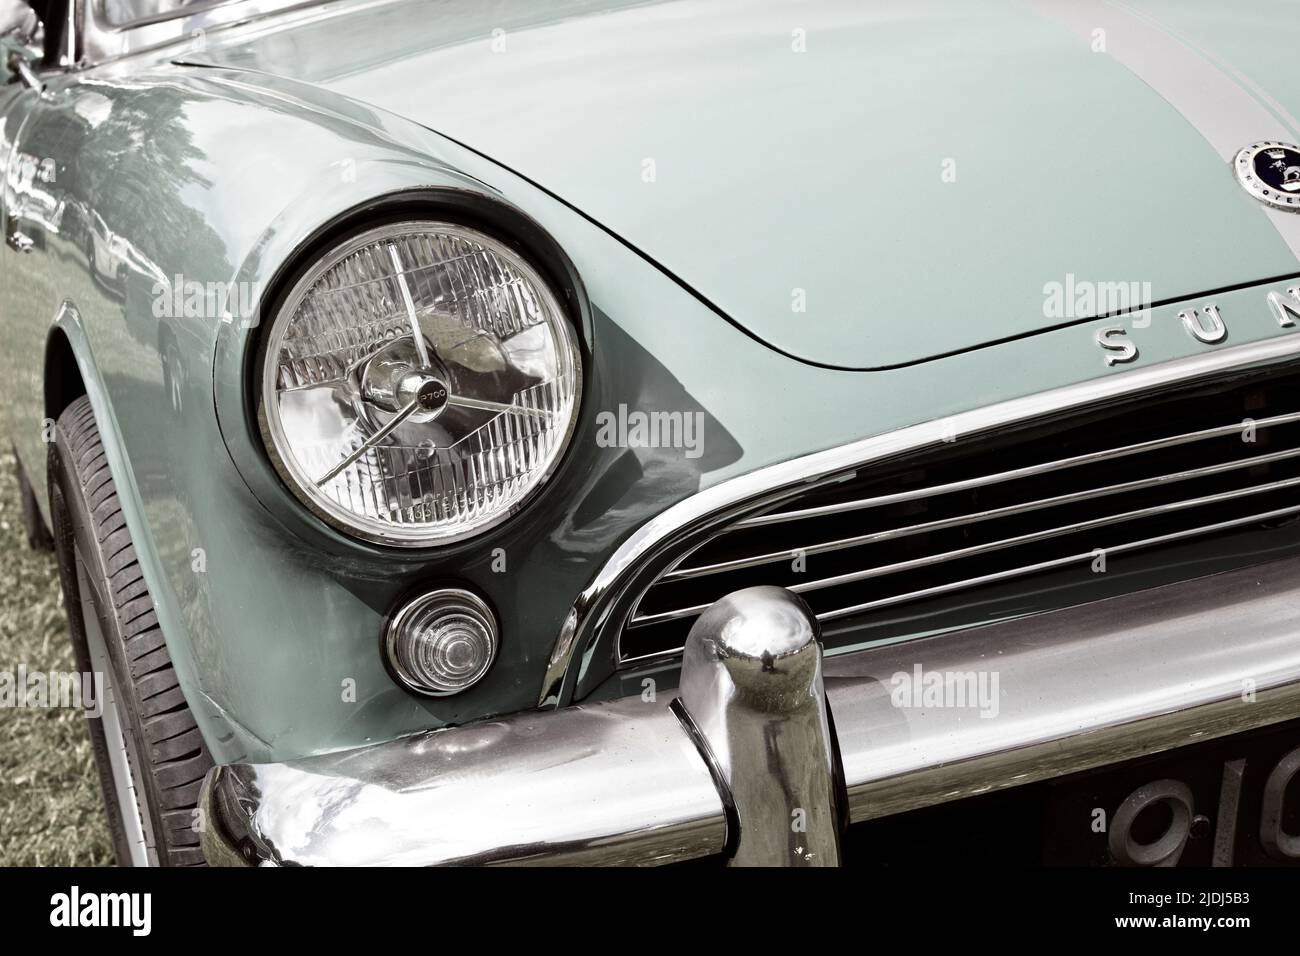 Close up front headlight detail of a classic vintage Sunbeam Rapier motor car. Stock Photo